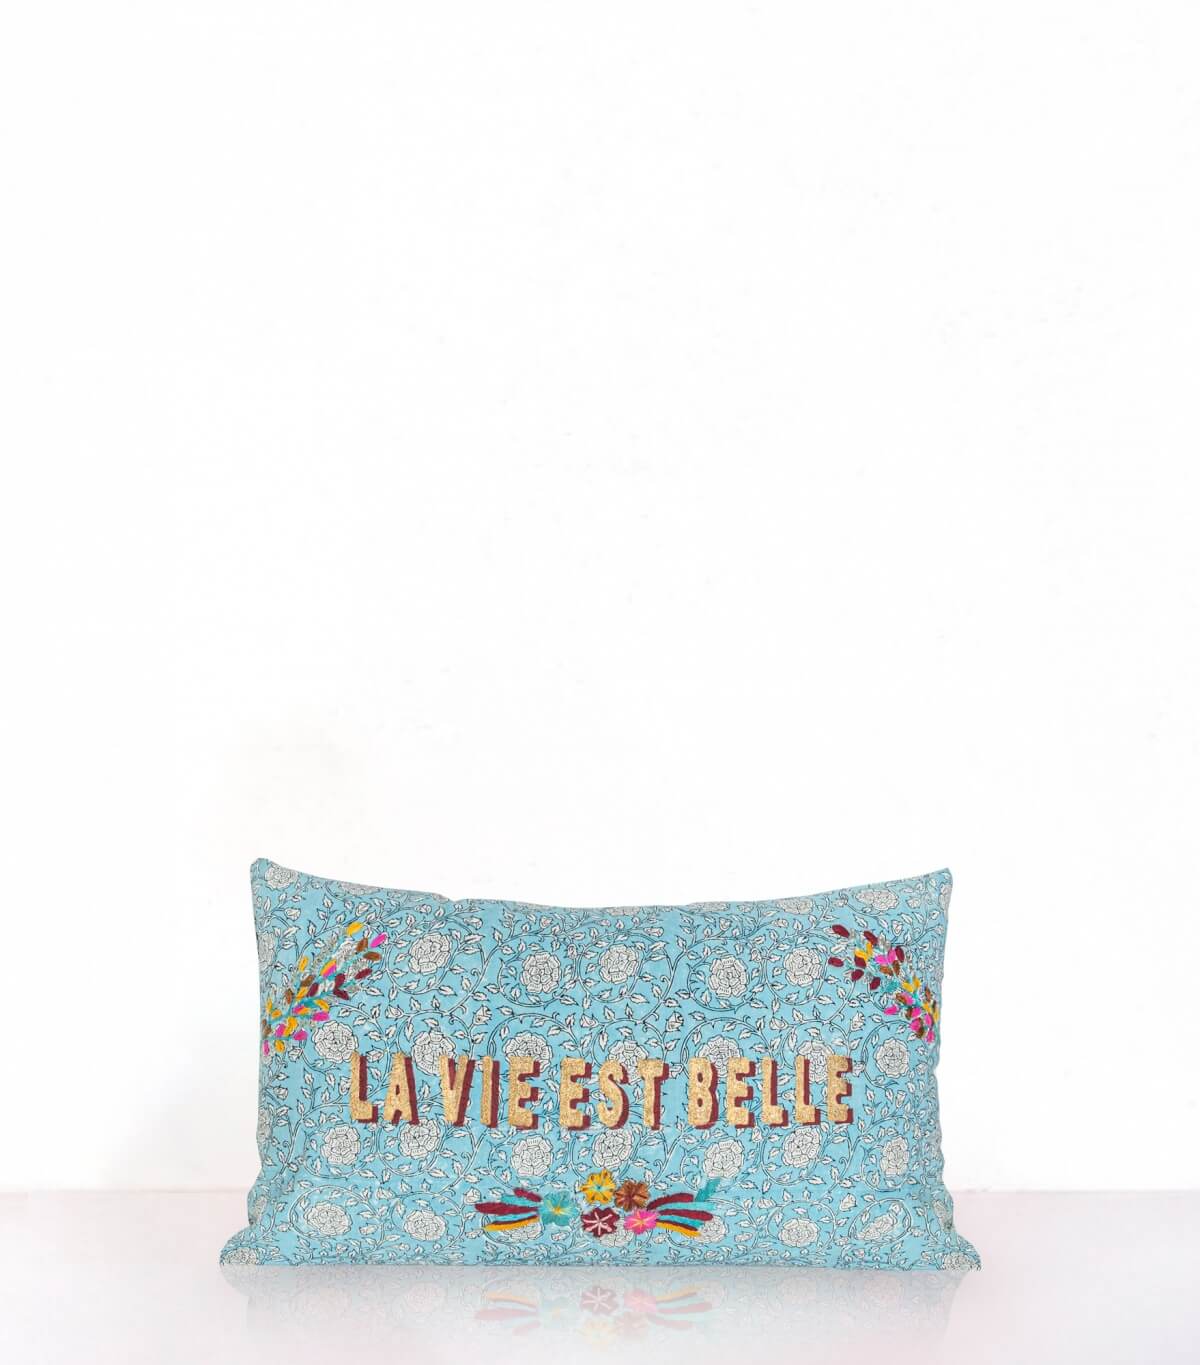 Bana LVB Cushion cover light blue